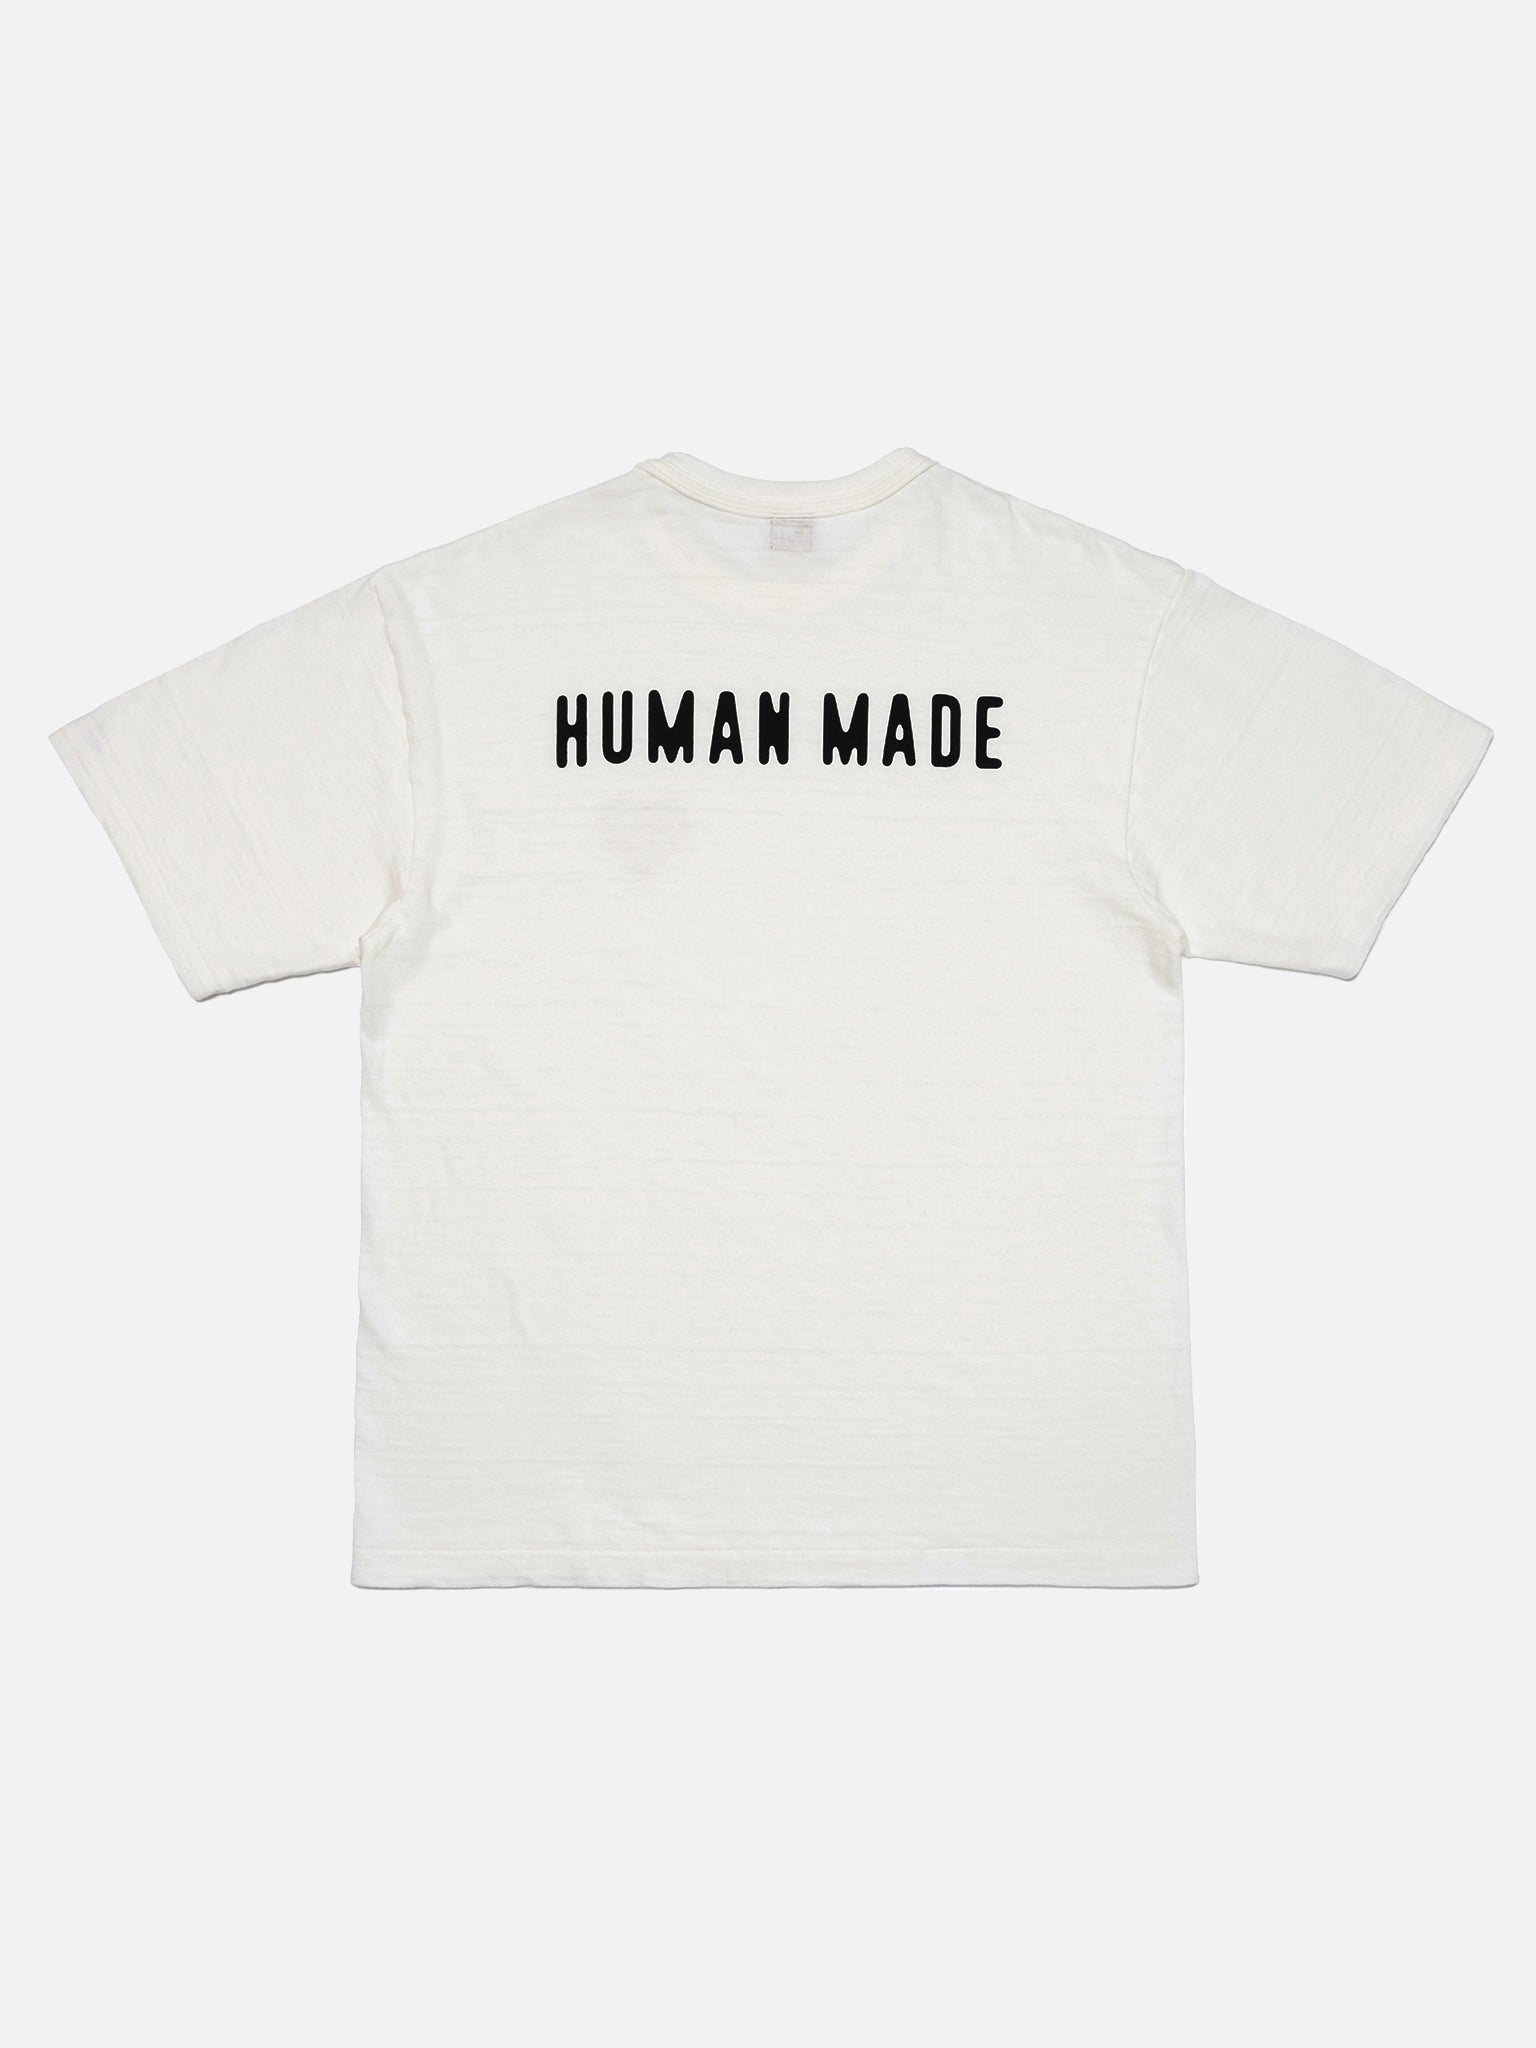 HUMAN MADE - GRAPHIC T-SHIRT #11-